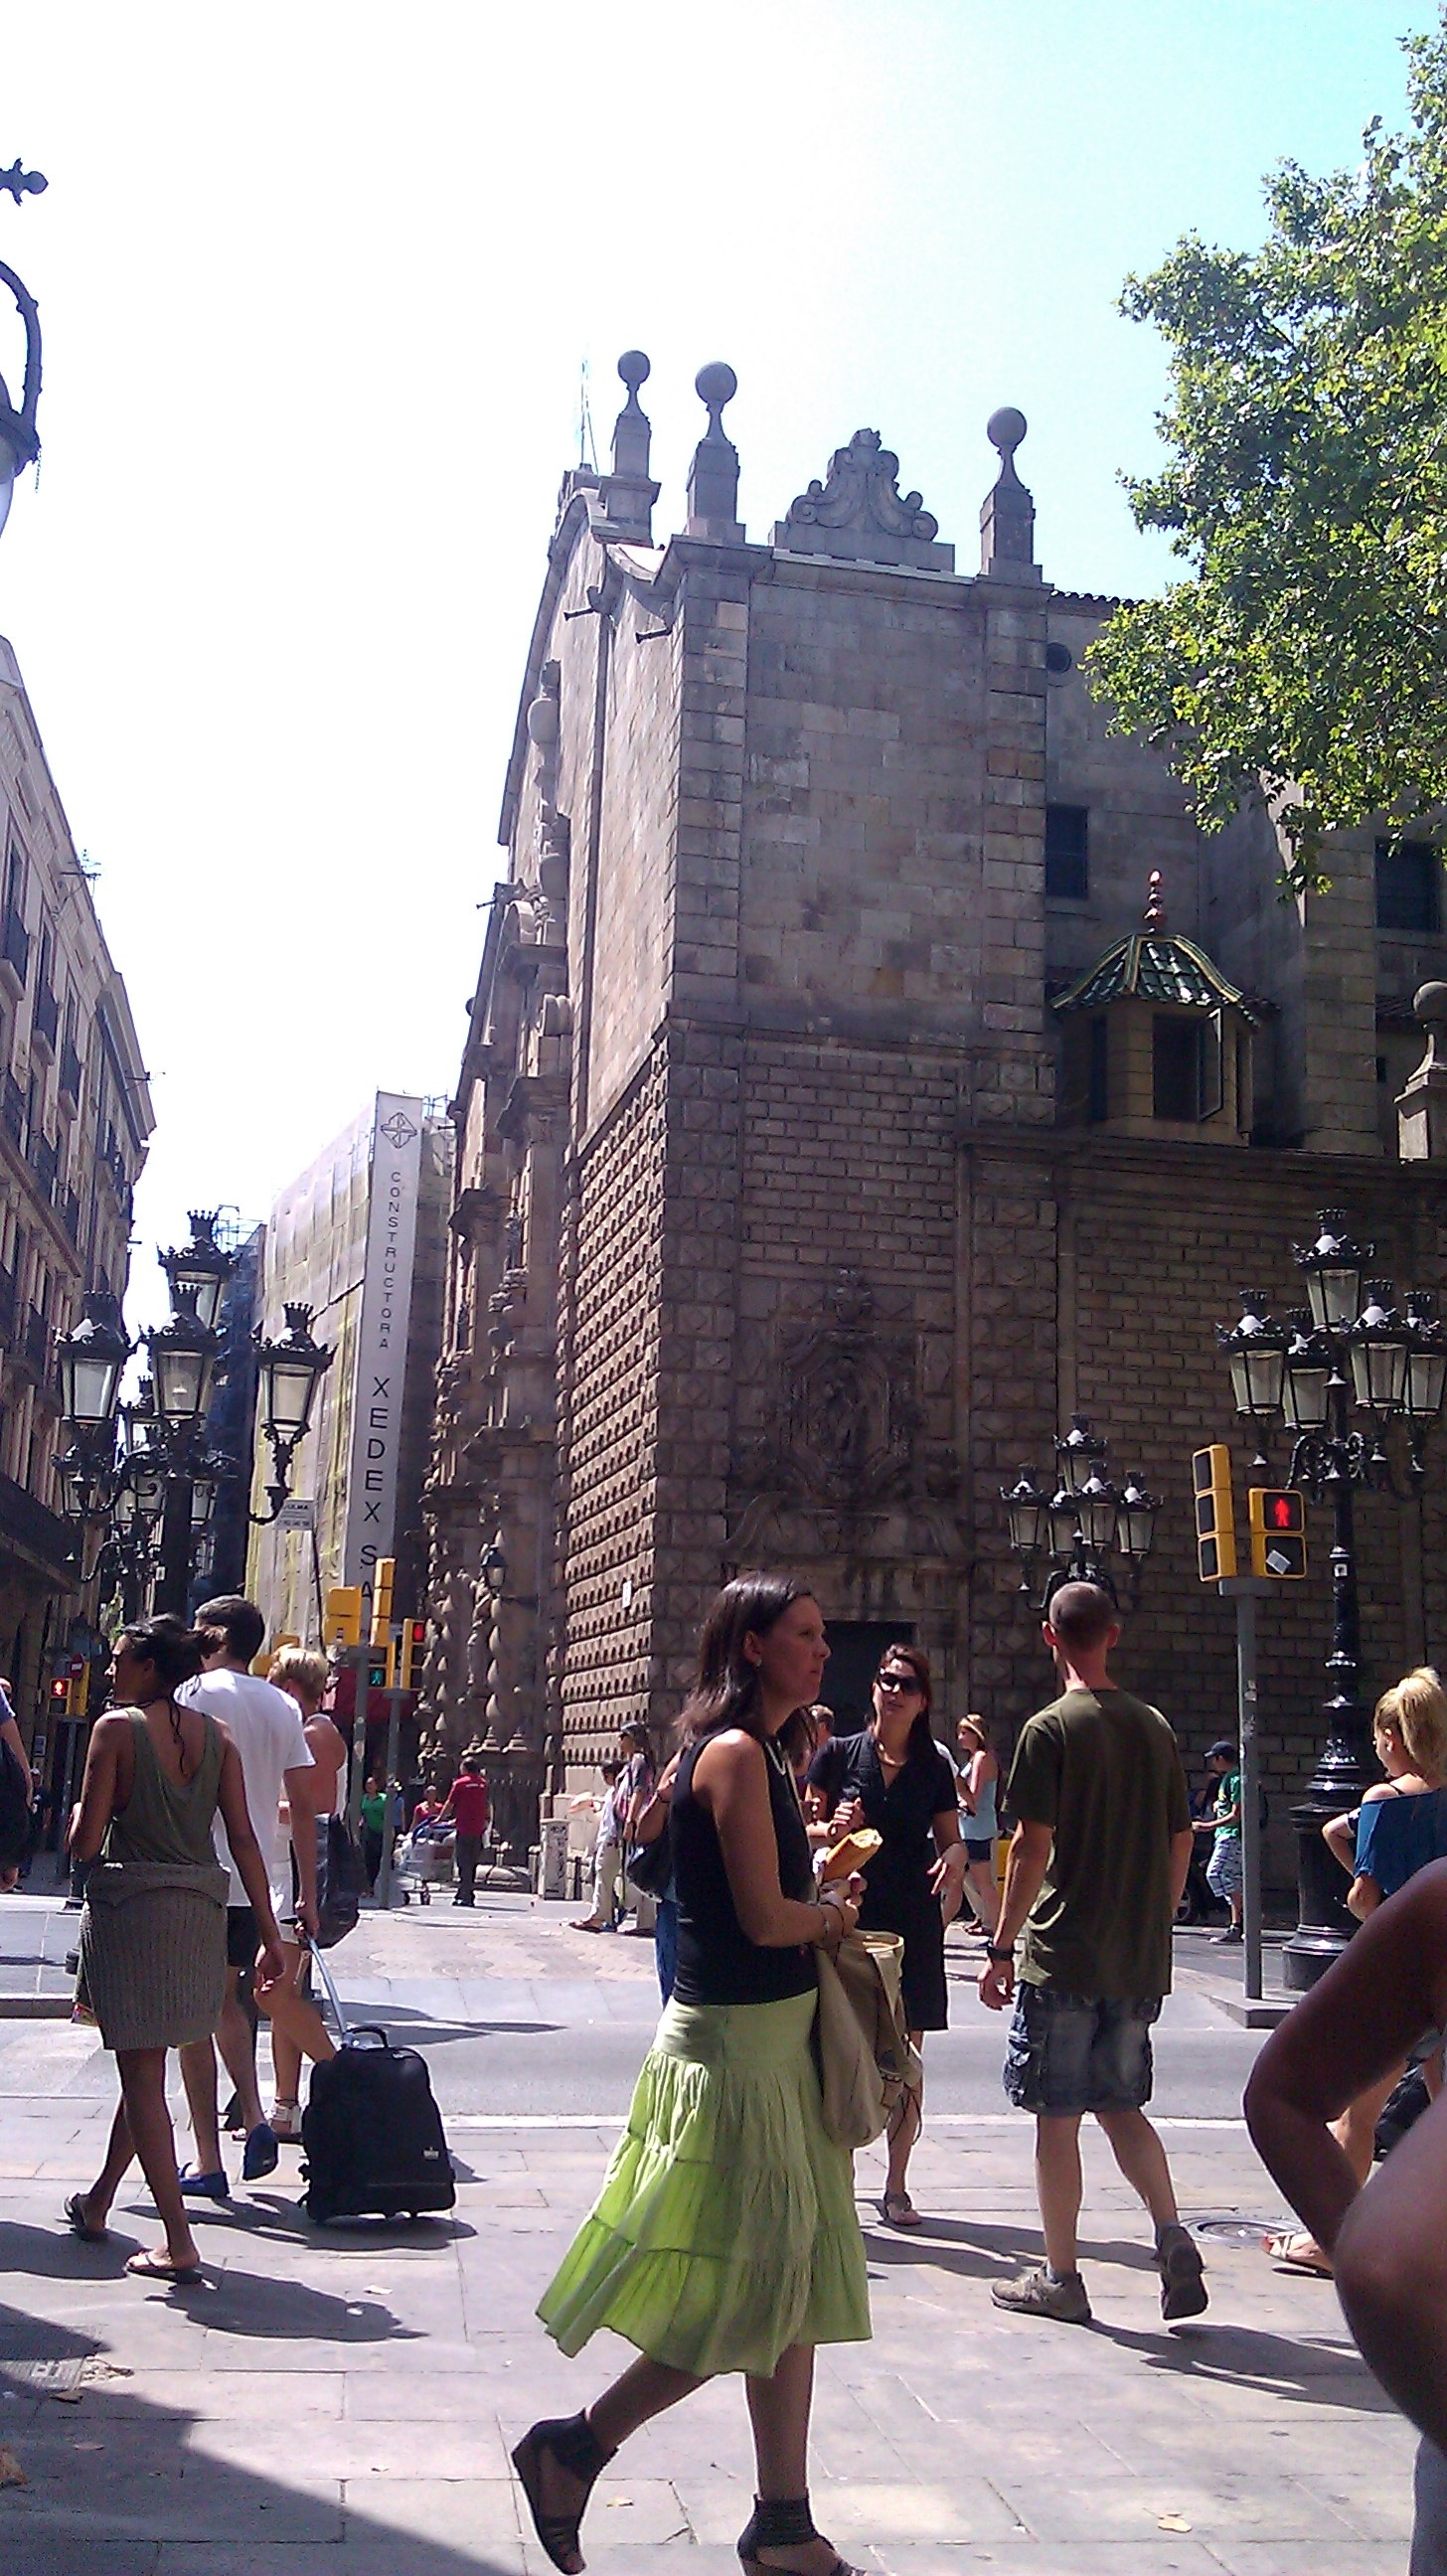 Barcelona-Old-City.jpg